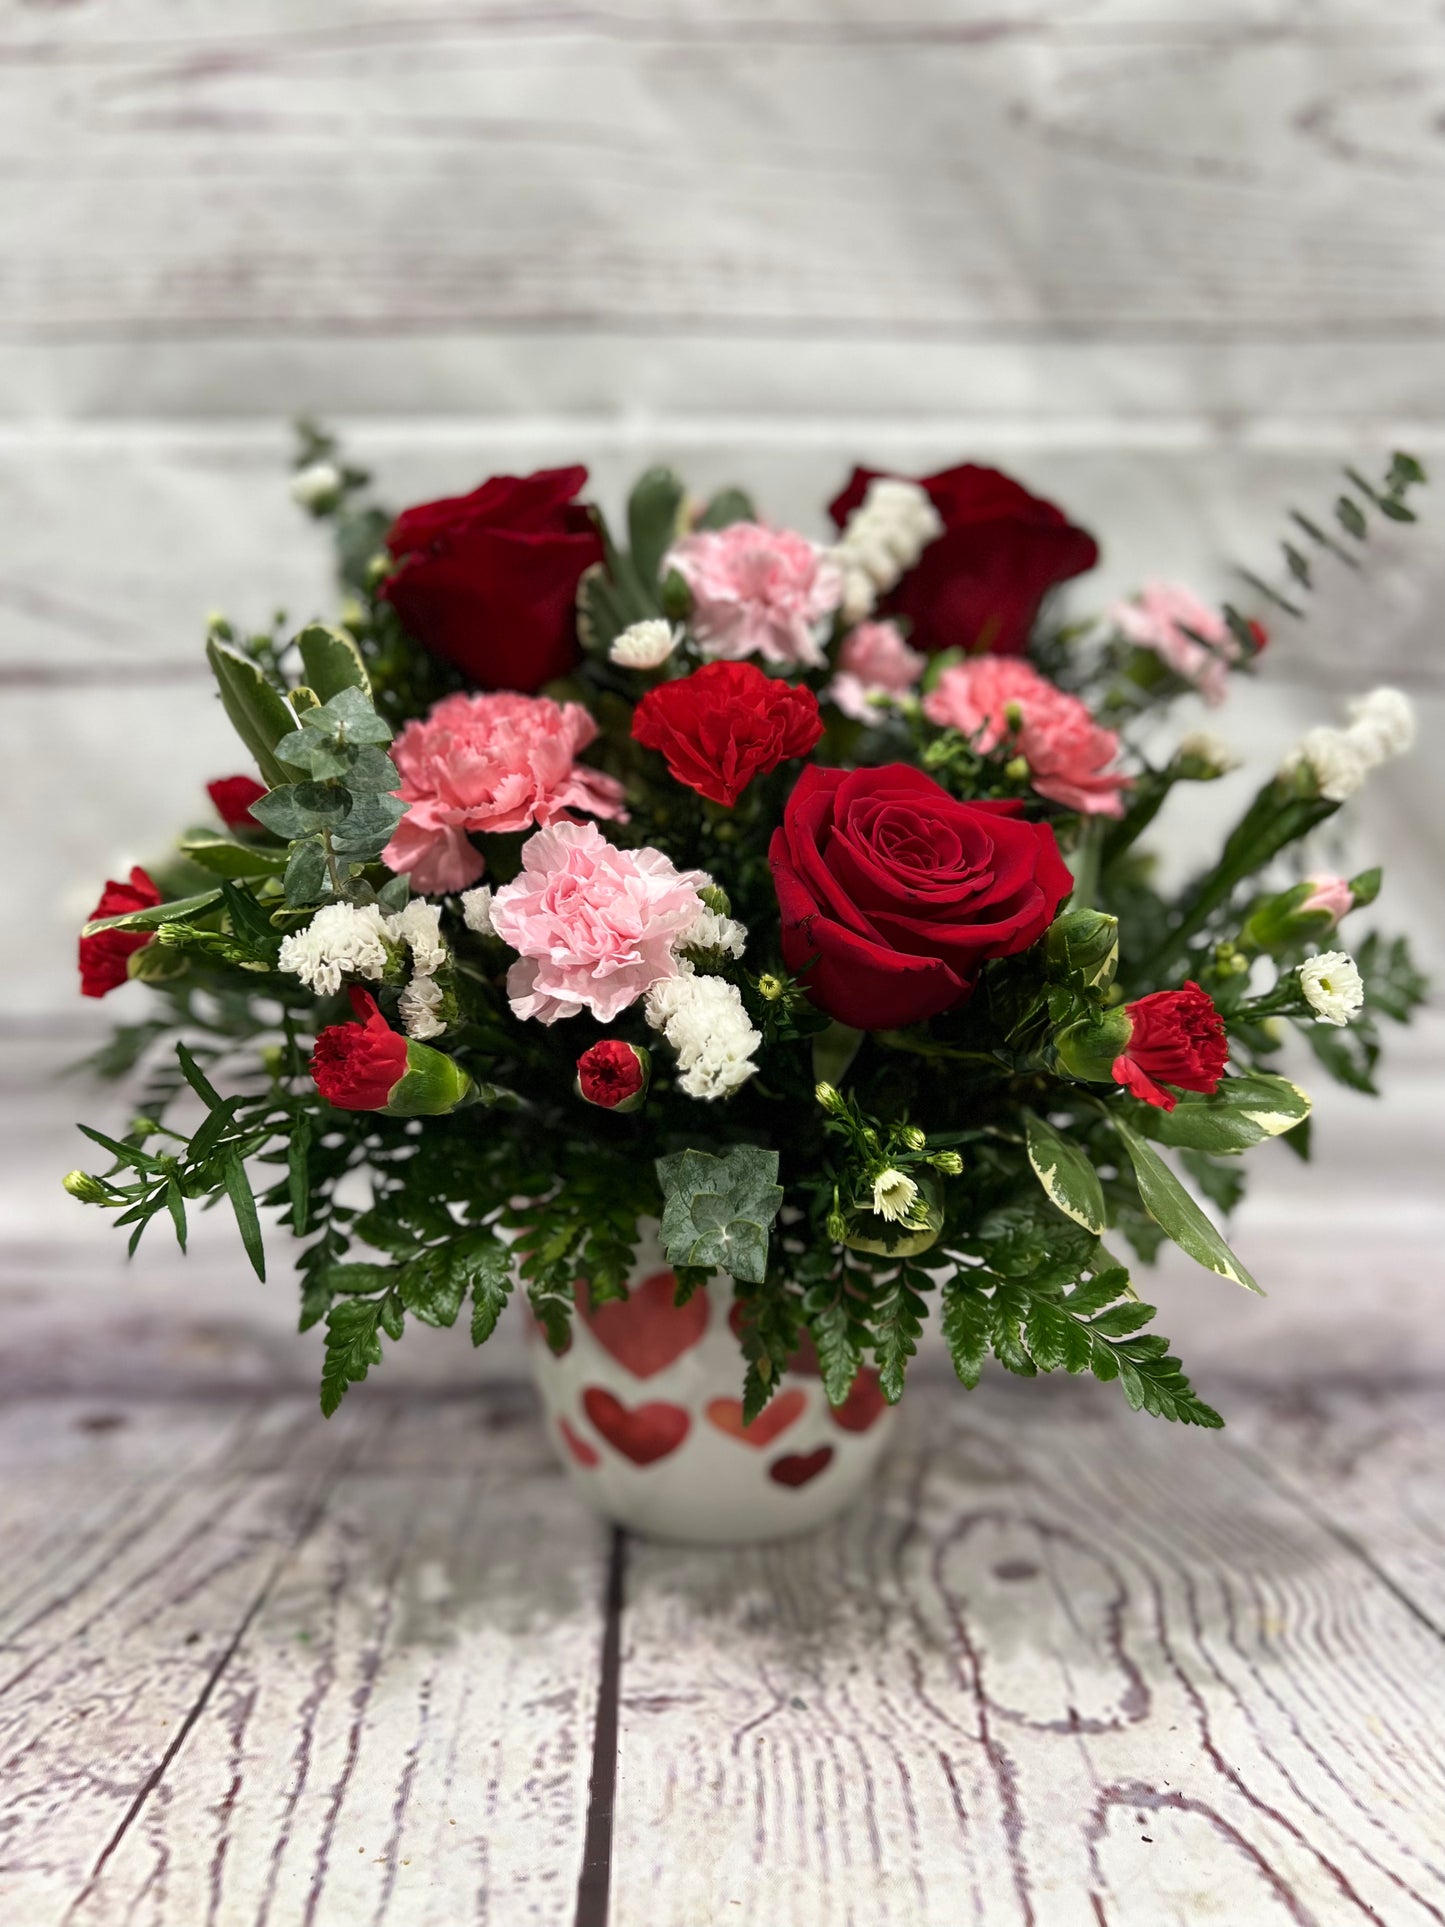 The Valentine's Day Bouquet